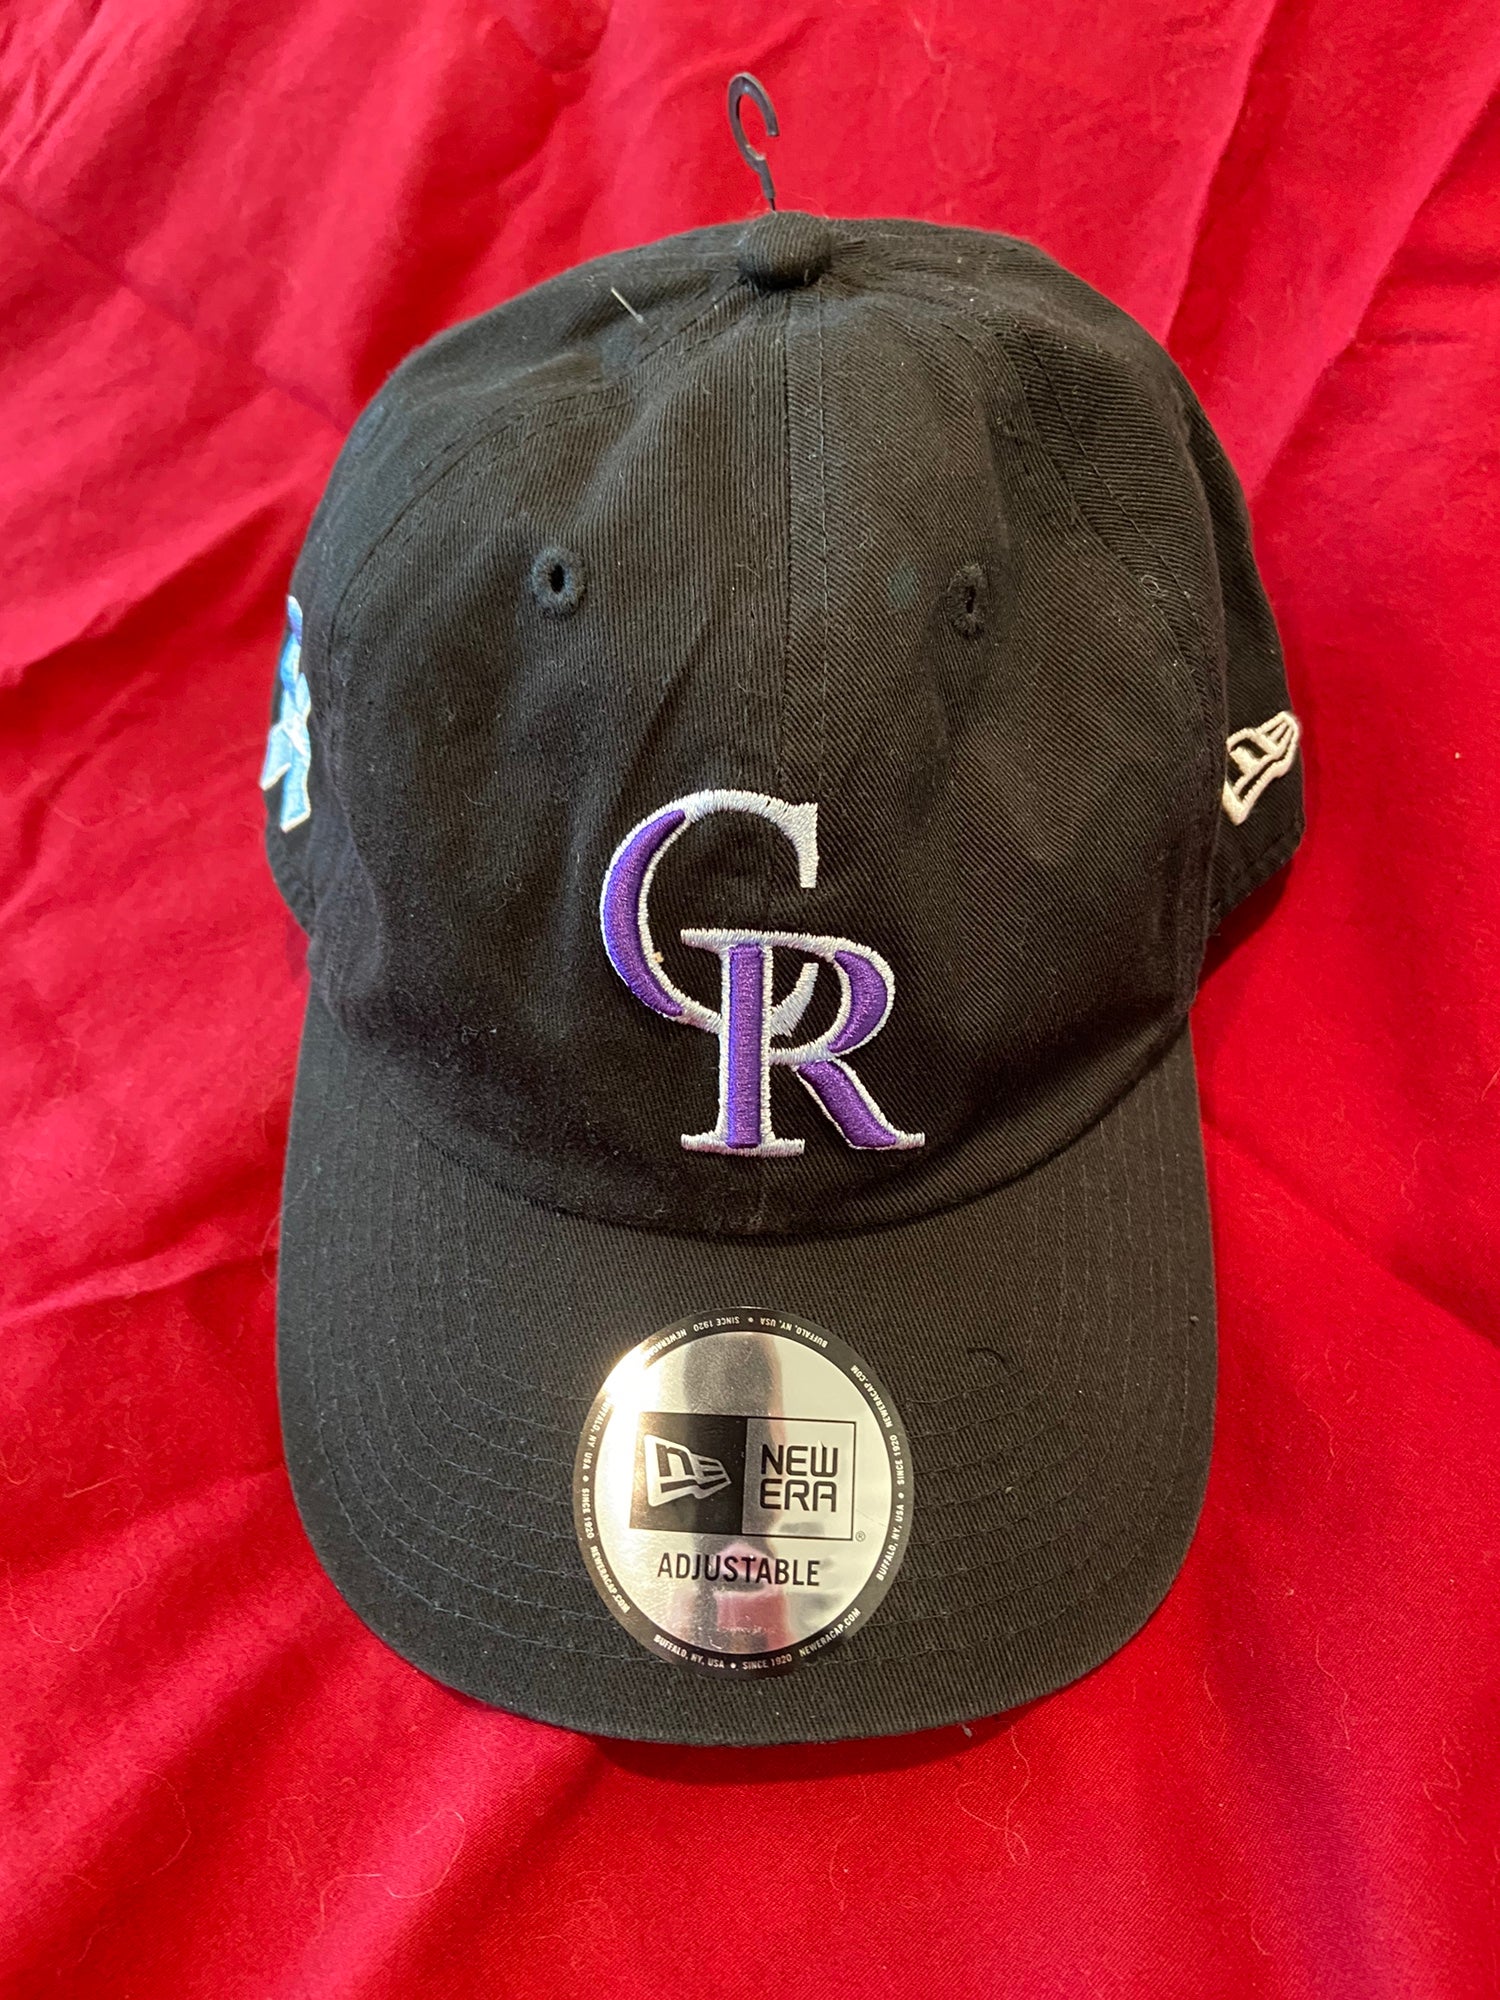 MLB Colorado Rockies Fathers Day New Era Hat, Size Adjustable NEW